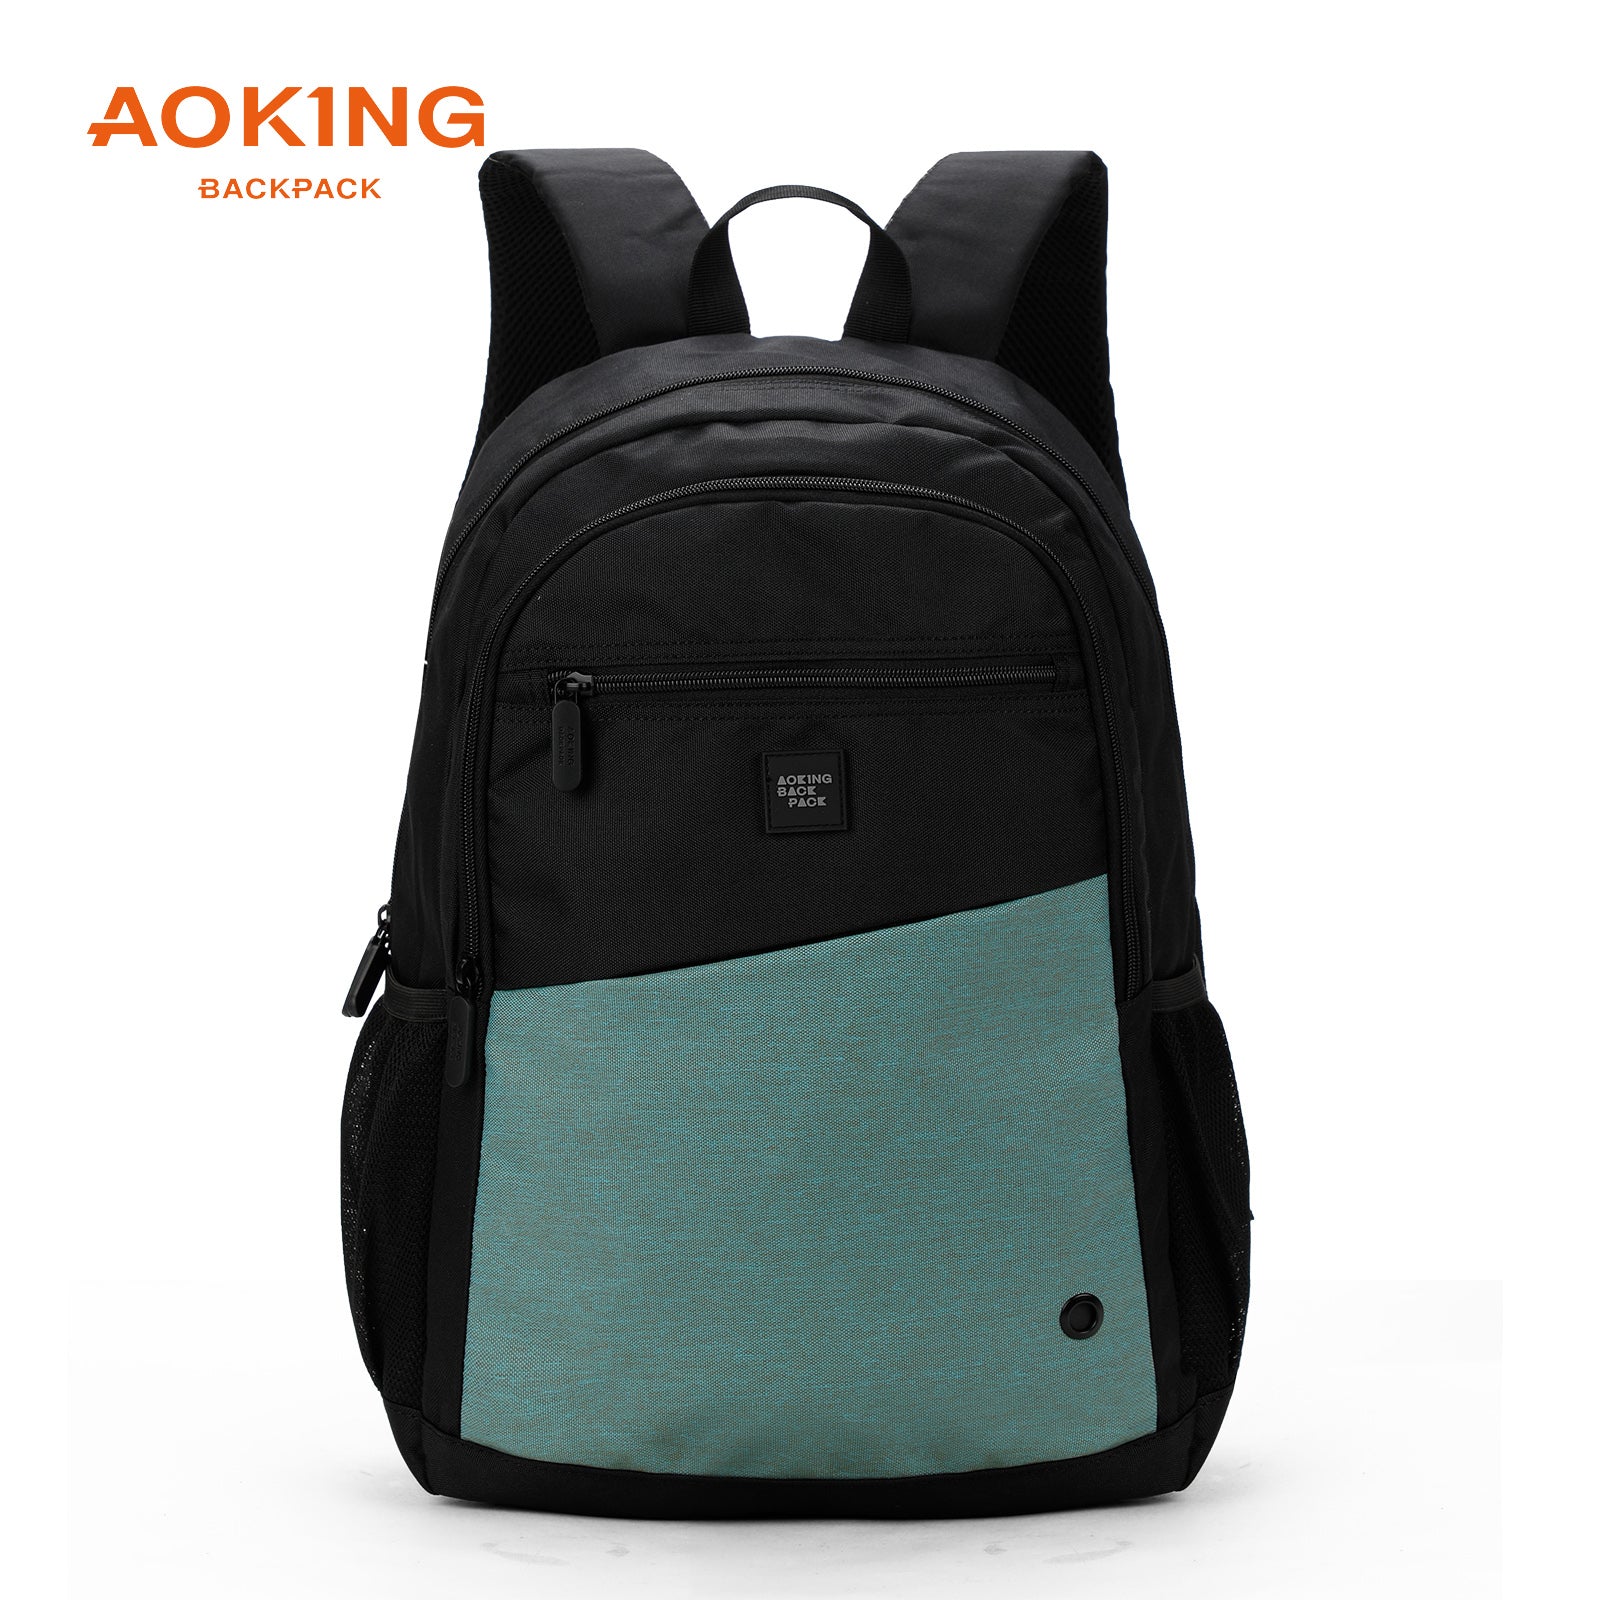 Aoking Backpack Casual Backpack Student Bag XN3315-10